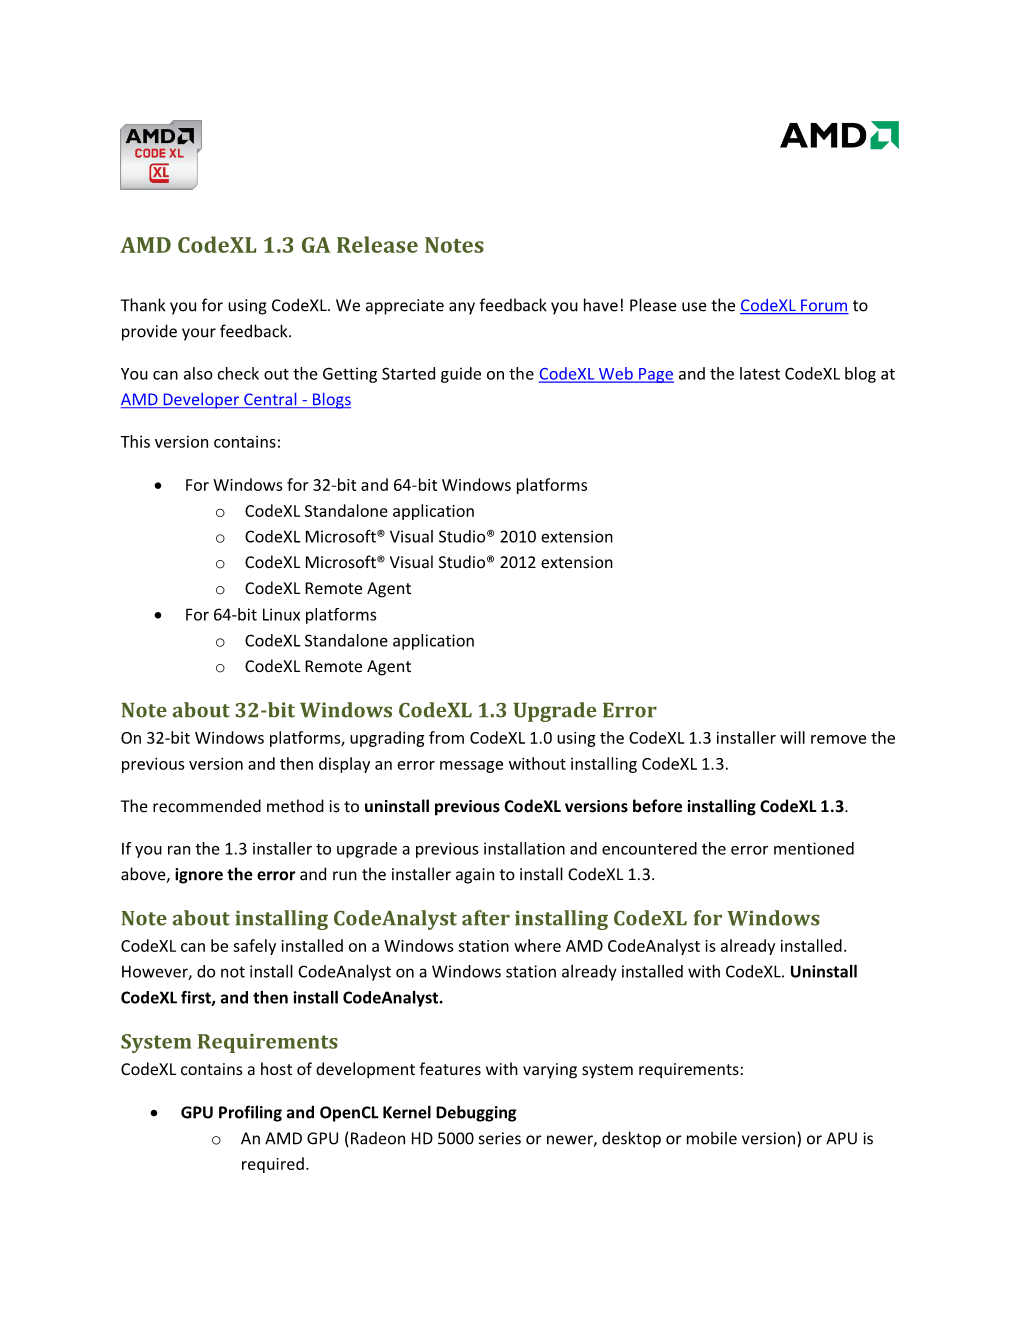 AMD Codexl 1.3 GA Release Notes